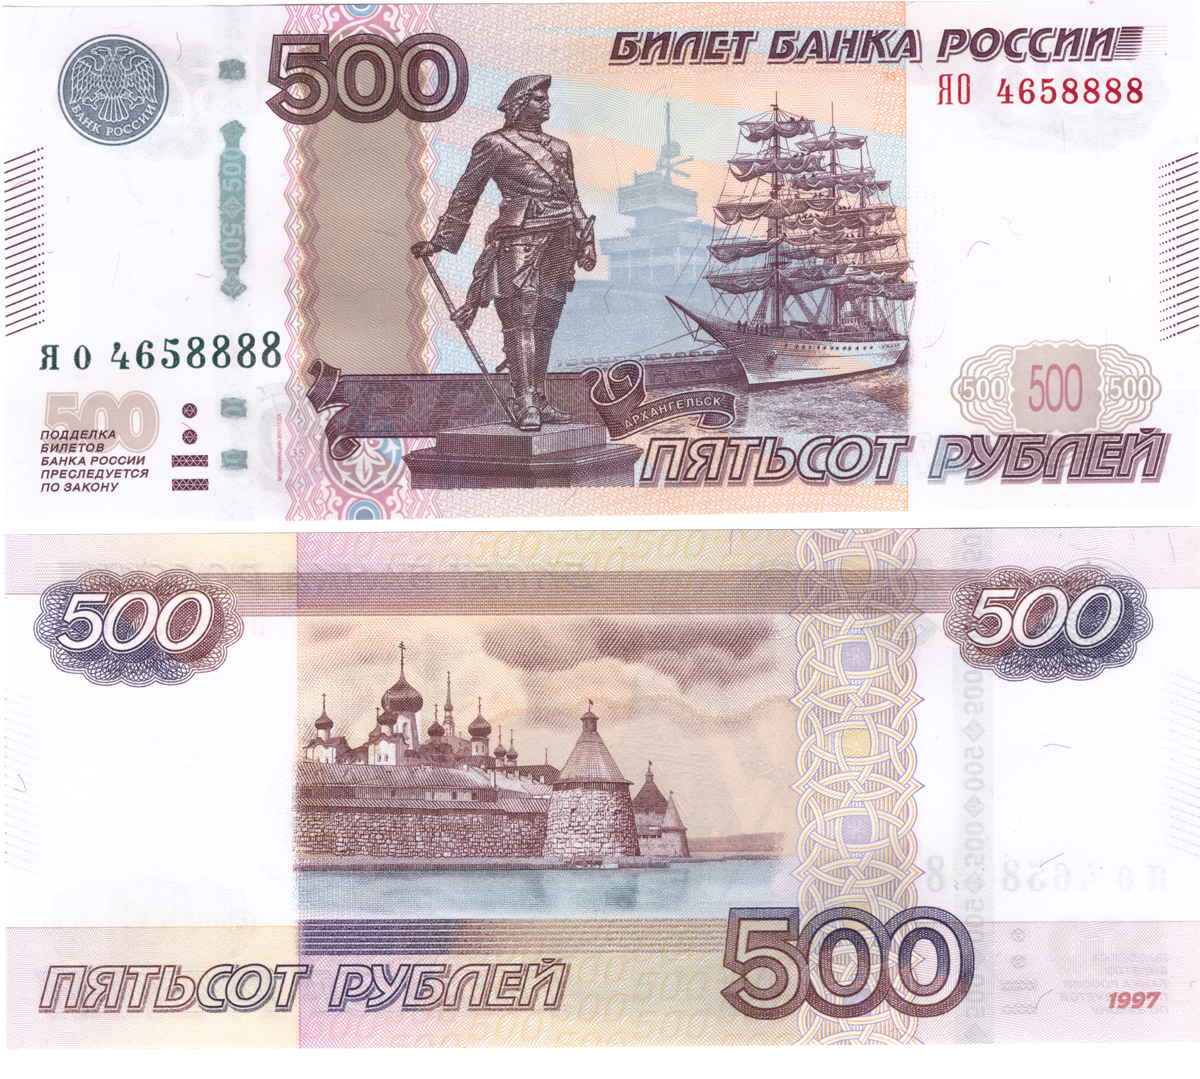 500 рублей хватит. 500 Рублей. Купюра 500р. Купюра 500 рублей. Пятьсот рублей 1997.